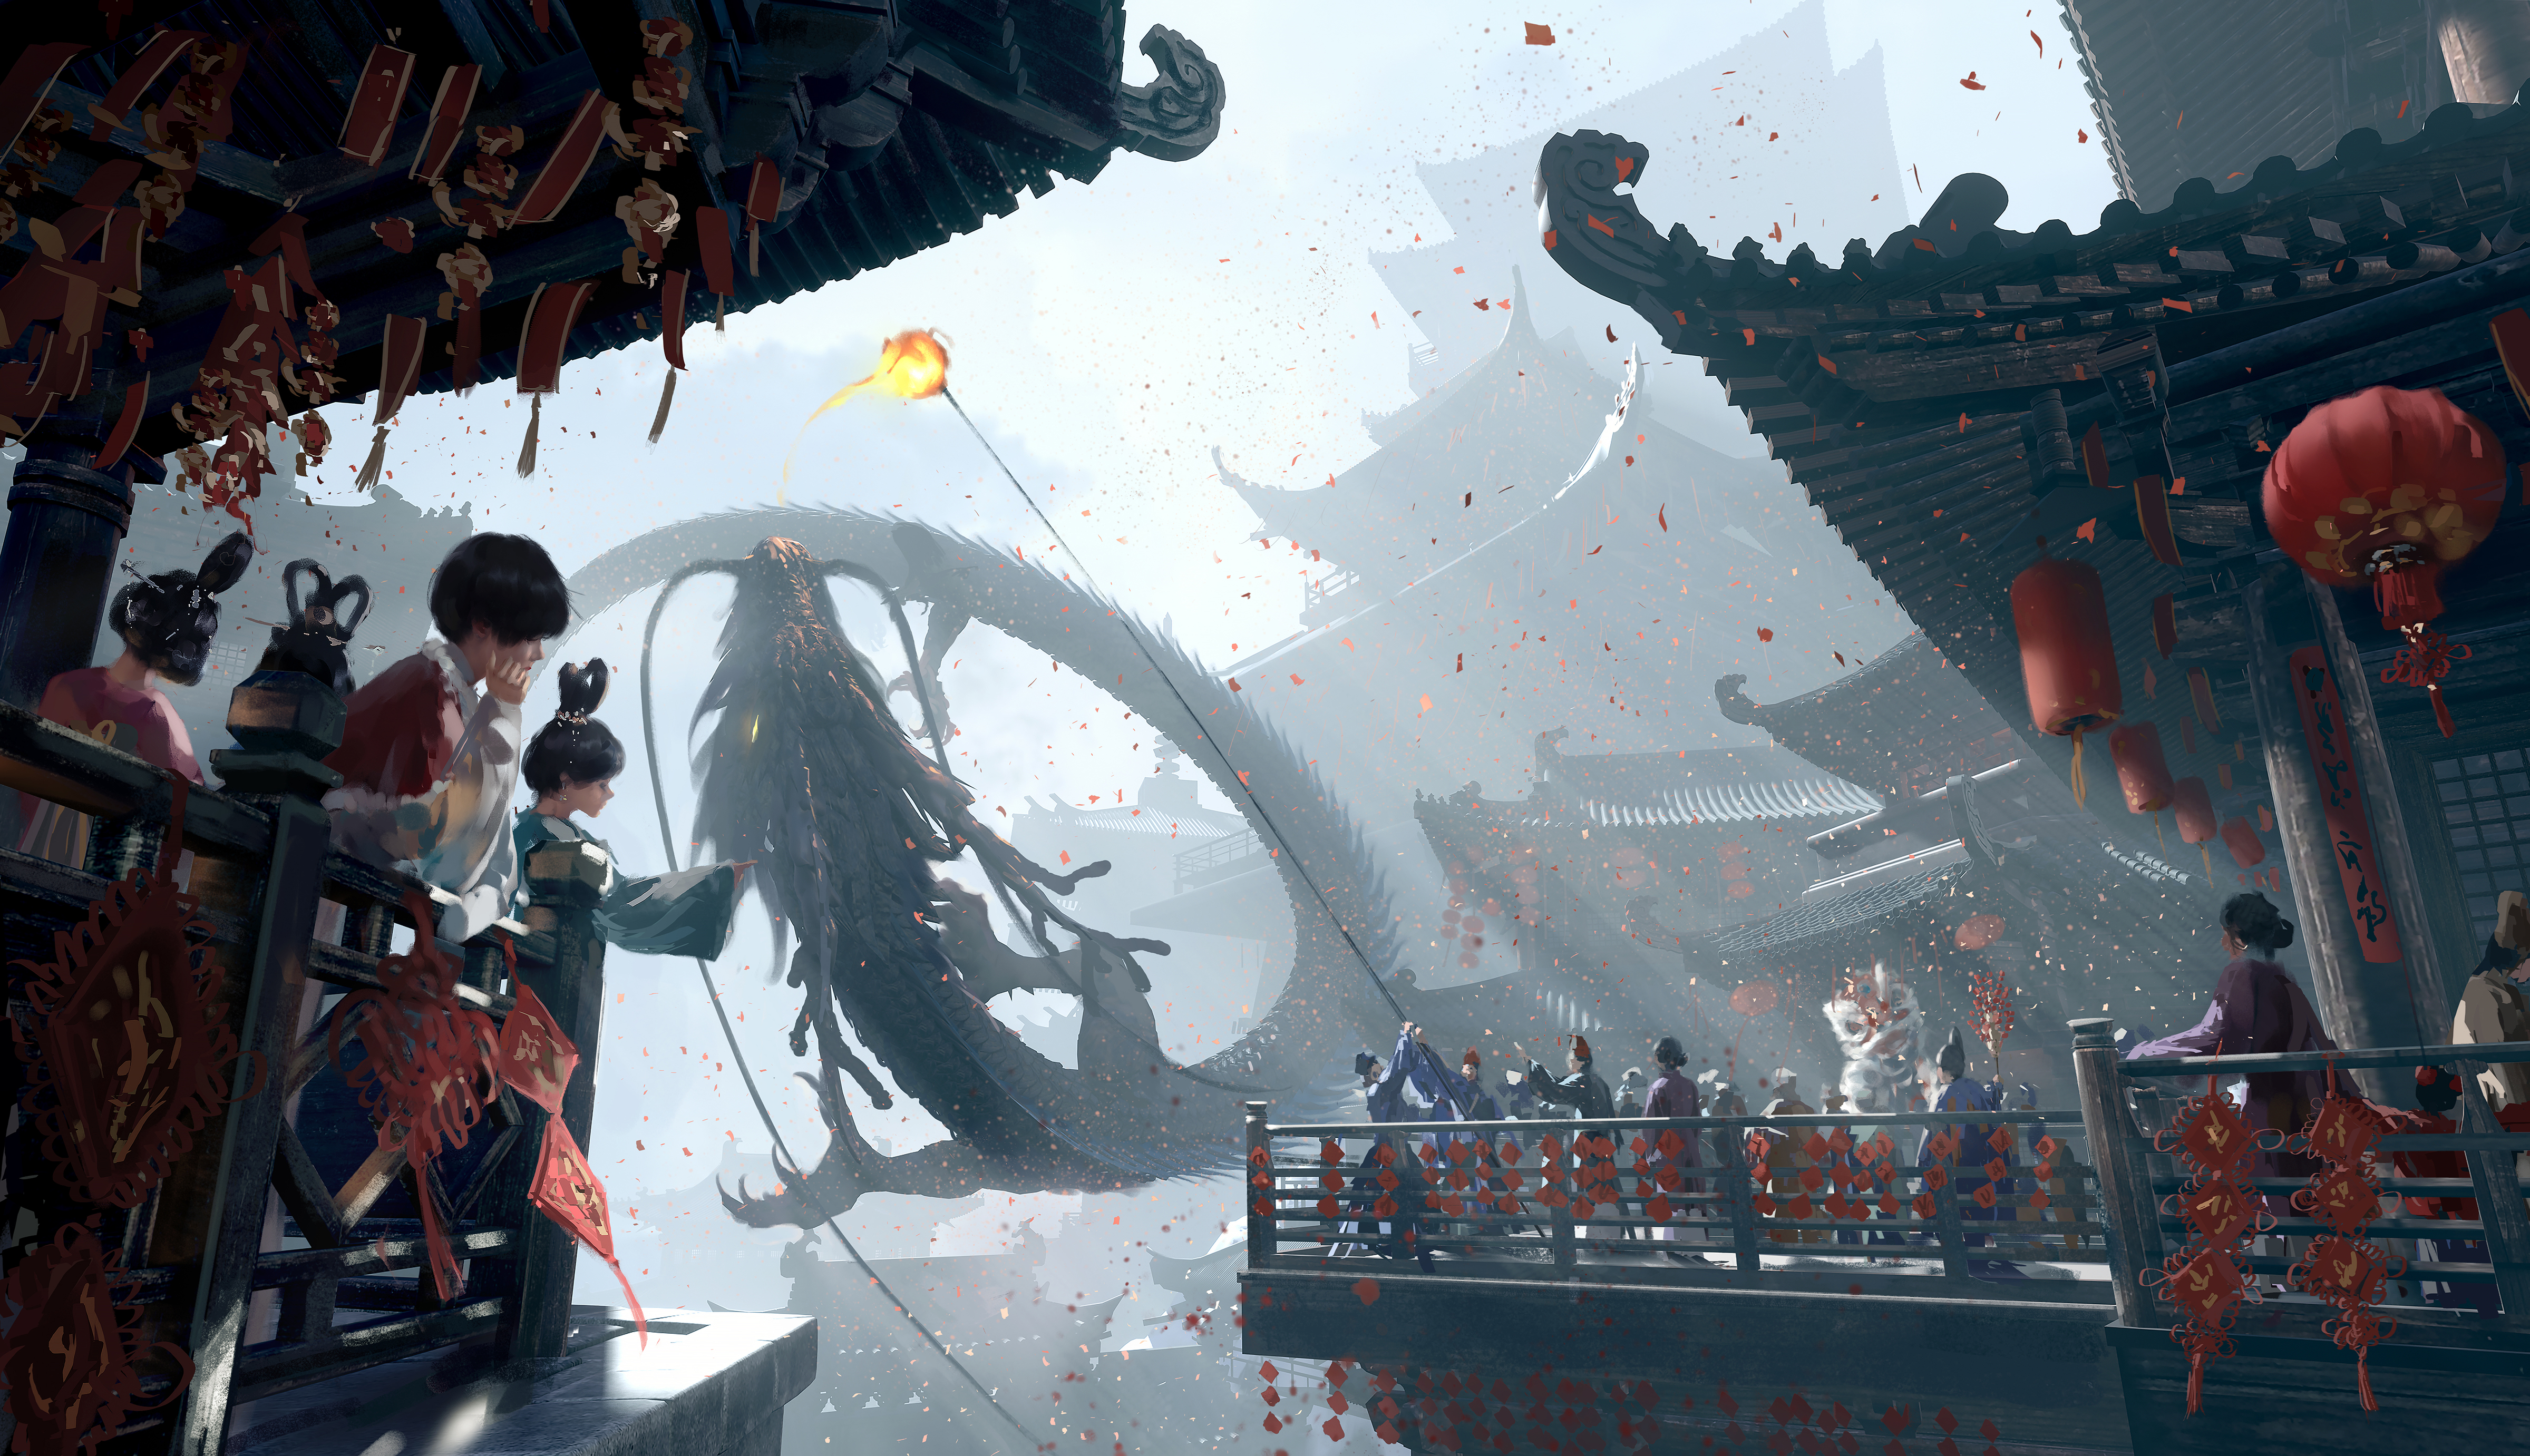 General 4800x2763 WLOP digital art artwork illustration fantasy art dragon architecture China crowds holiday Chinese dragon